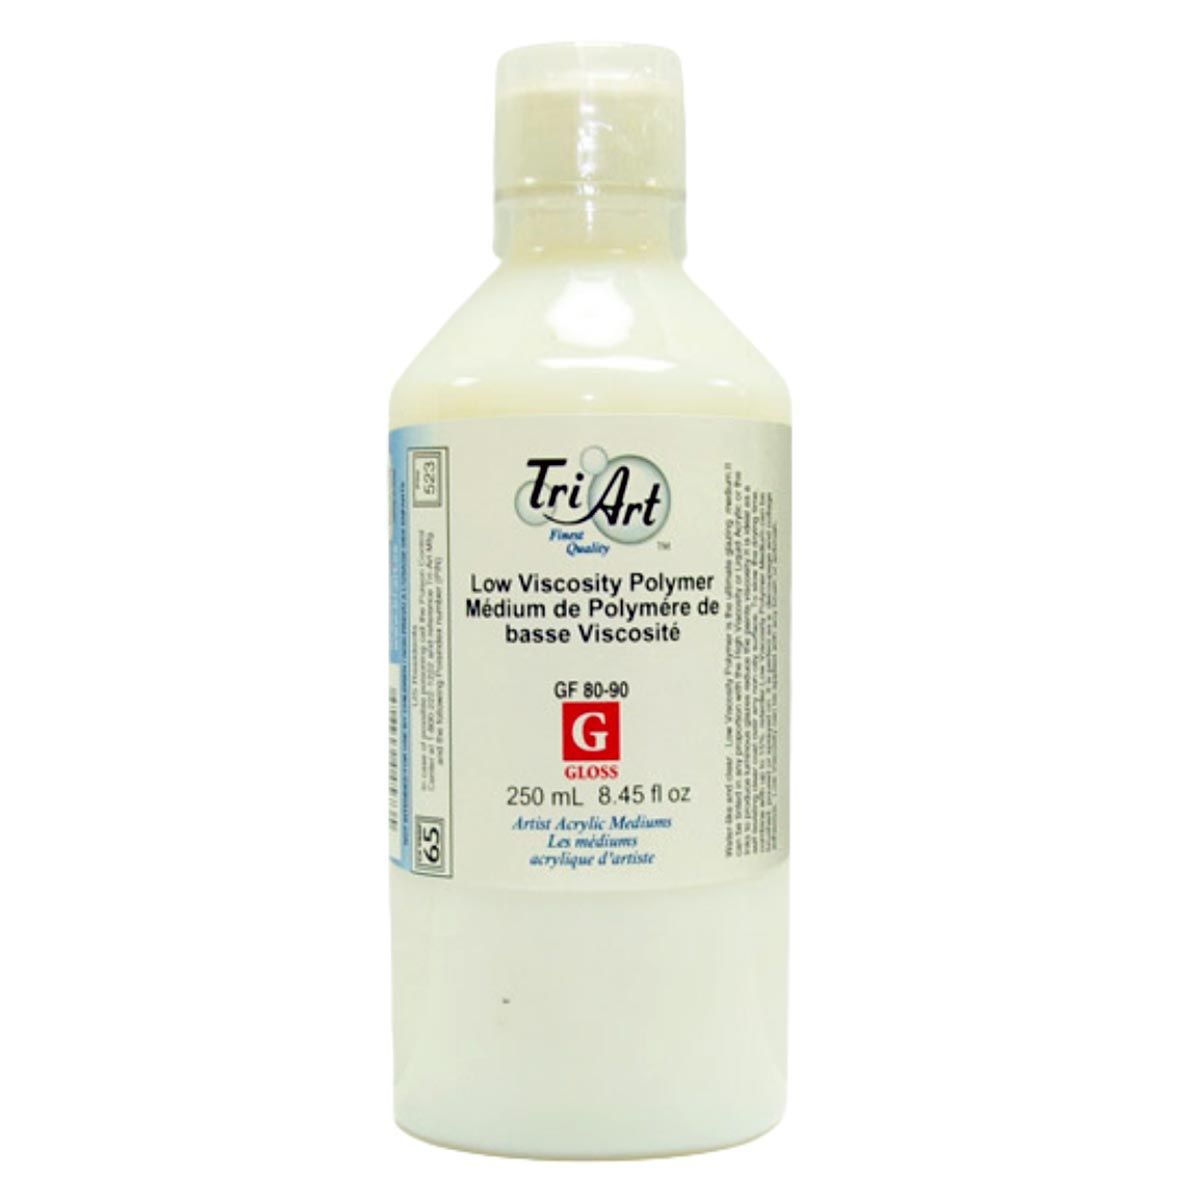 Tri-Art Finest Quality Low Viscosity Polymer Gloss 250 ml